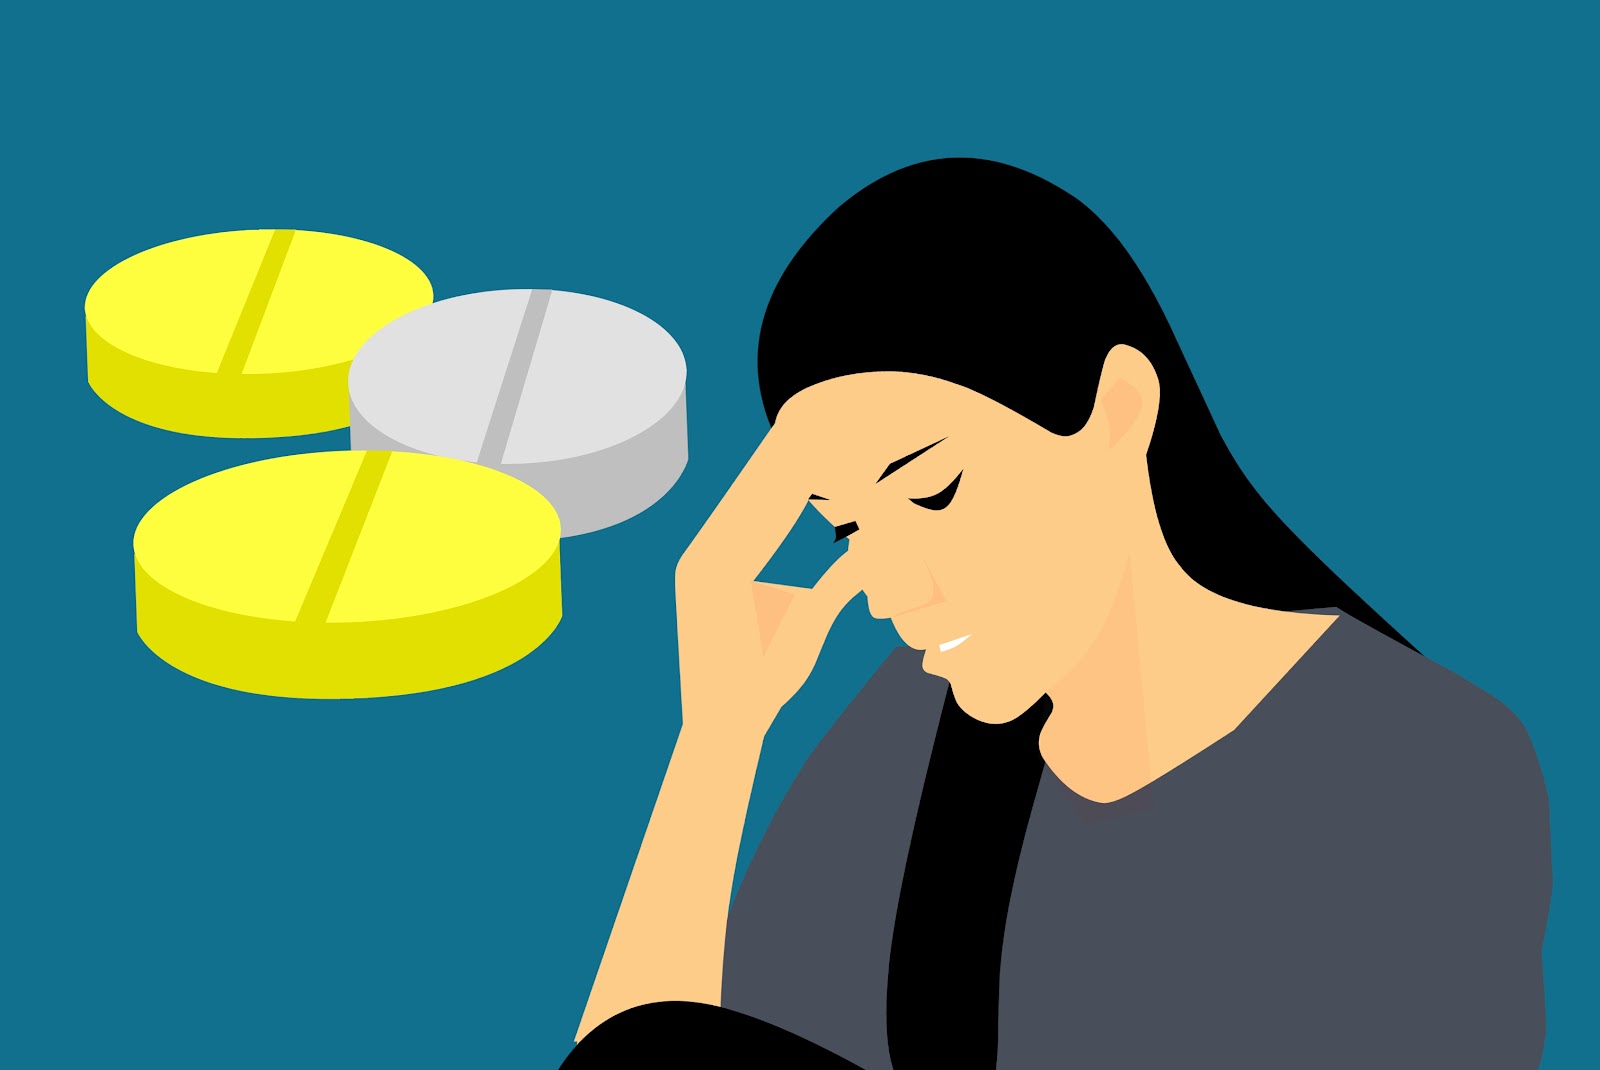 Treatments of migraine and headache